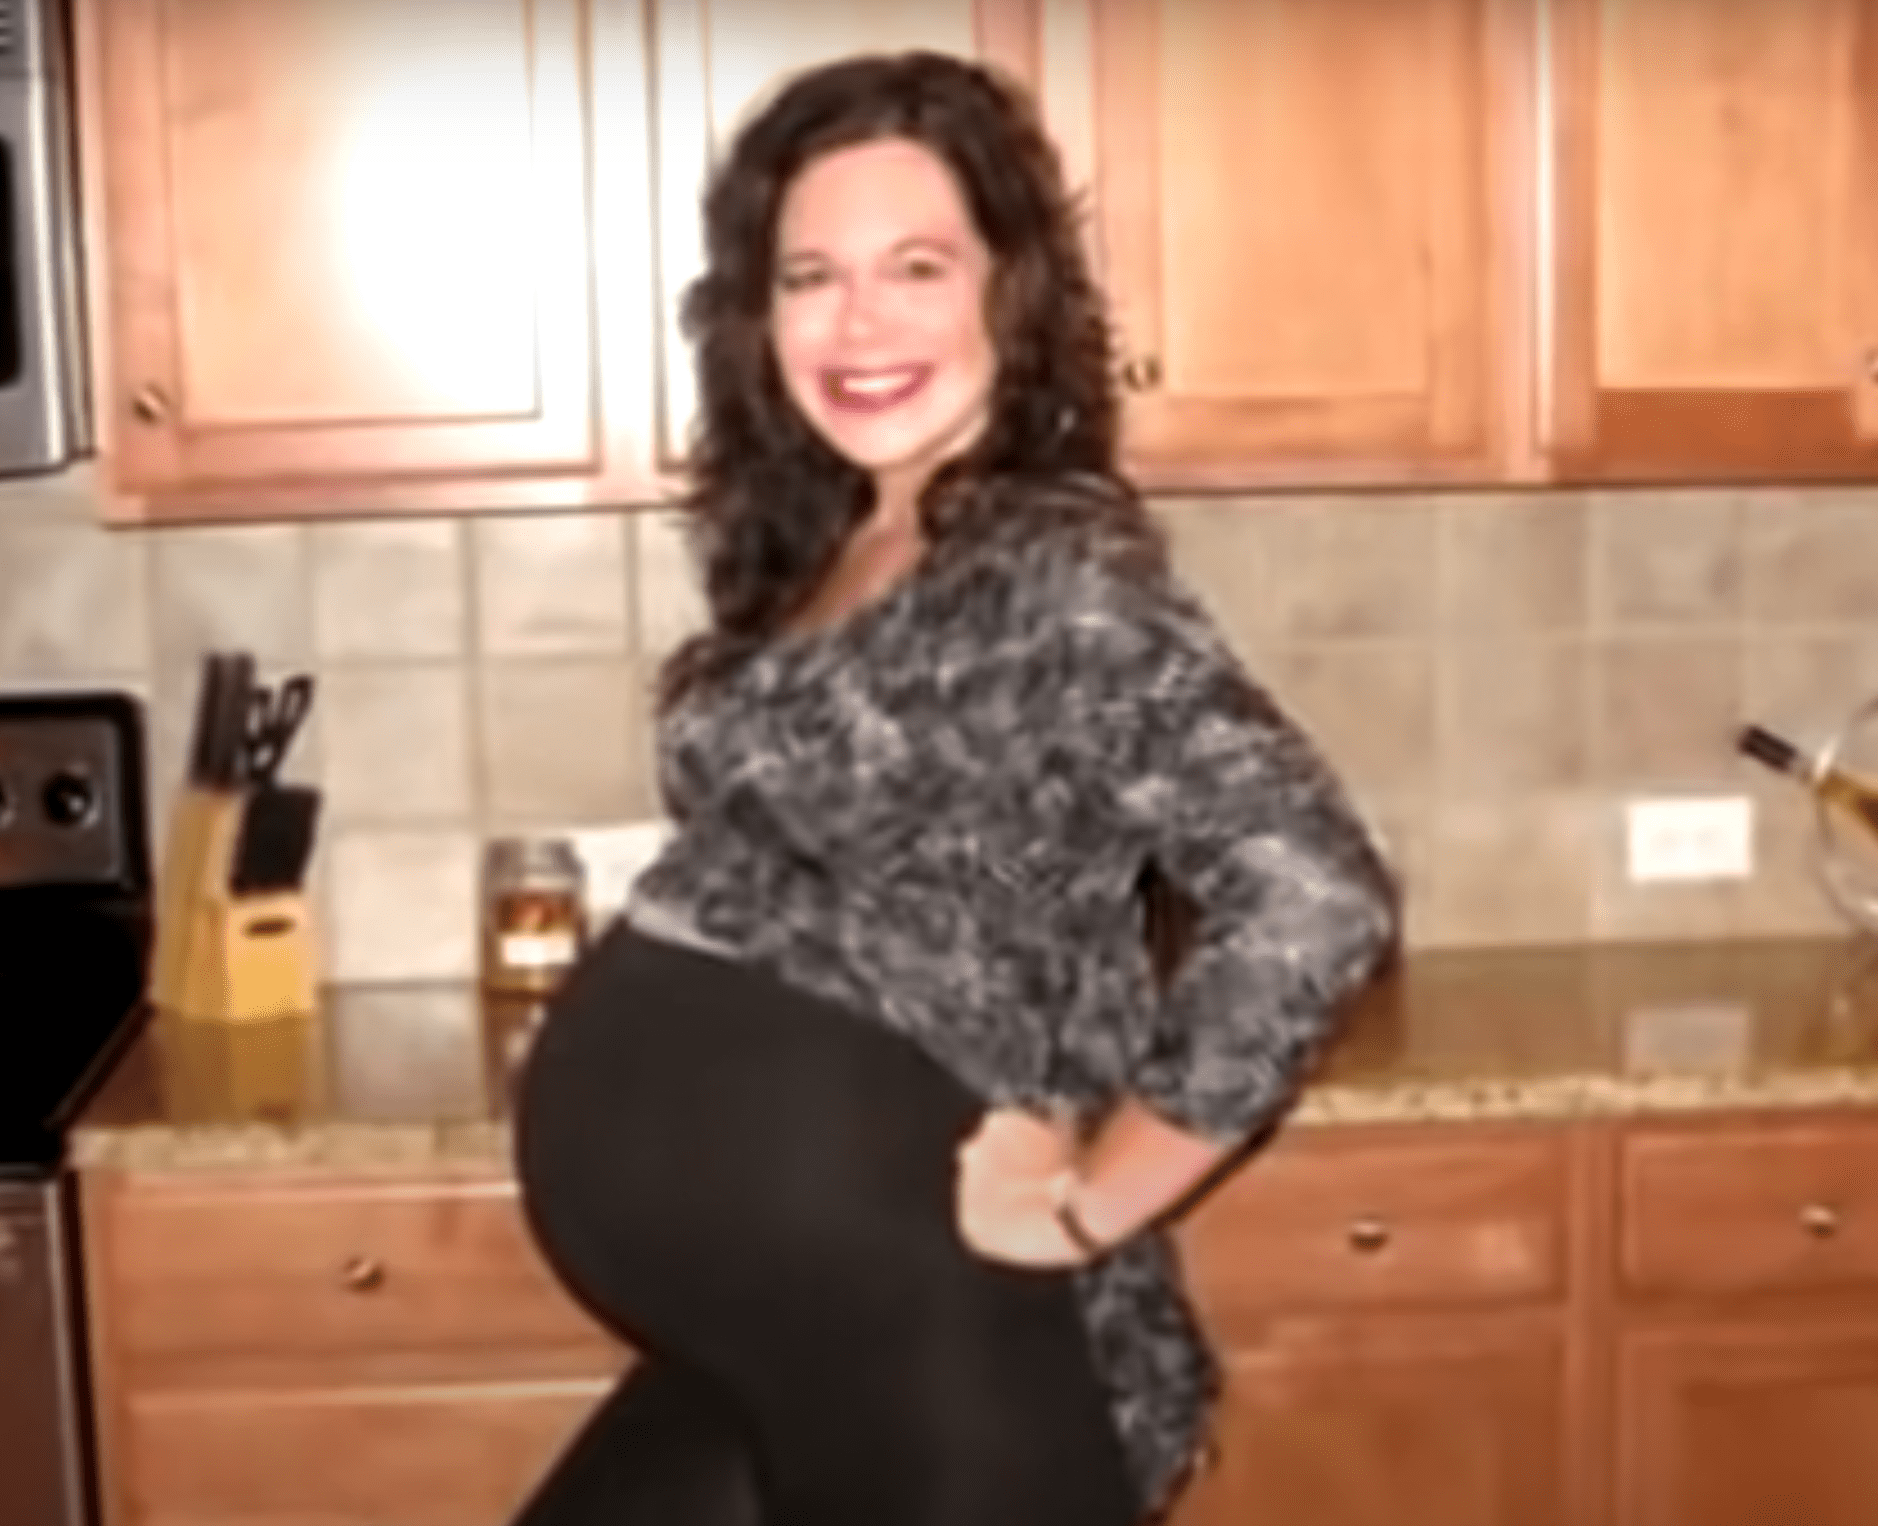 Miranda Crawford pregnant with quadruplets. | Source: youtube.com/WorldchannelNews7